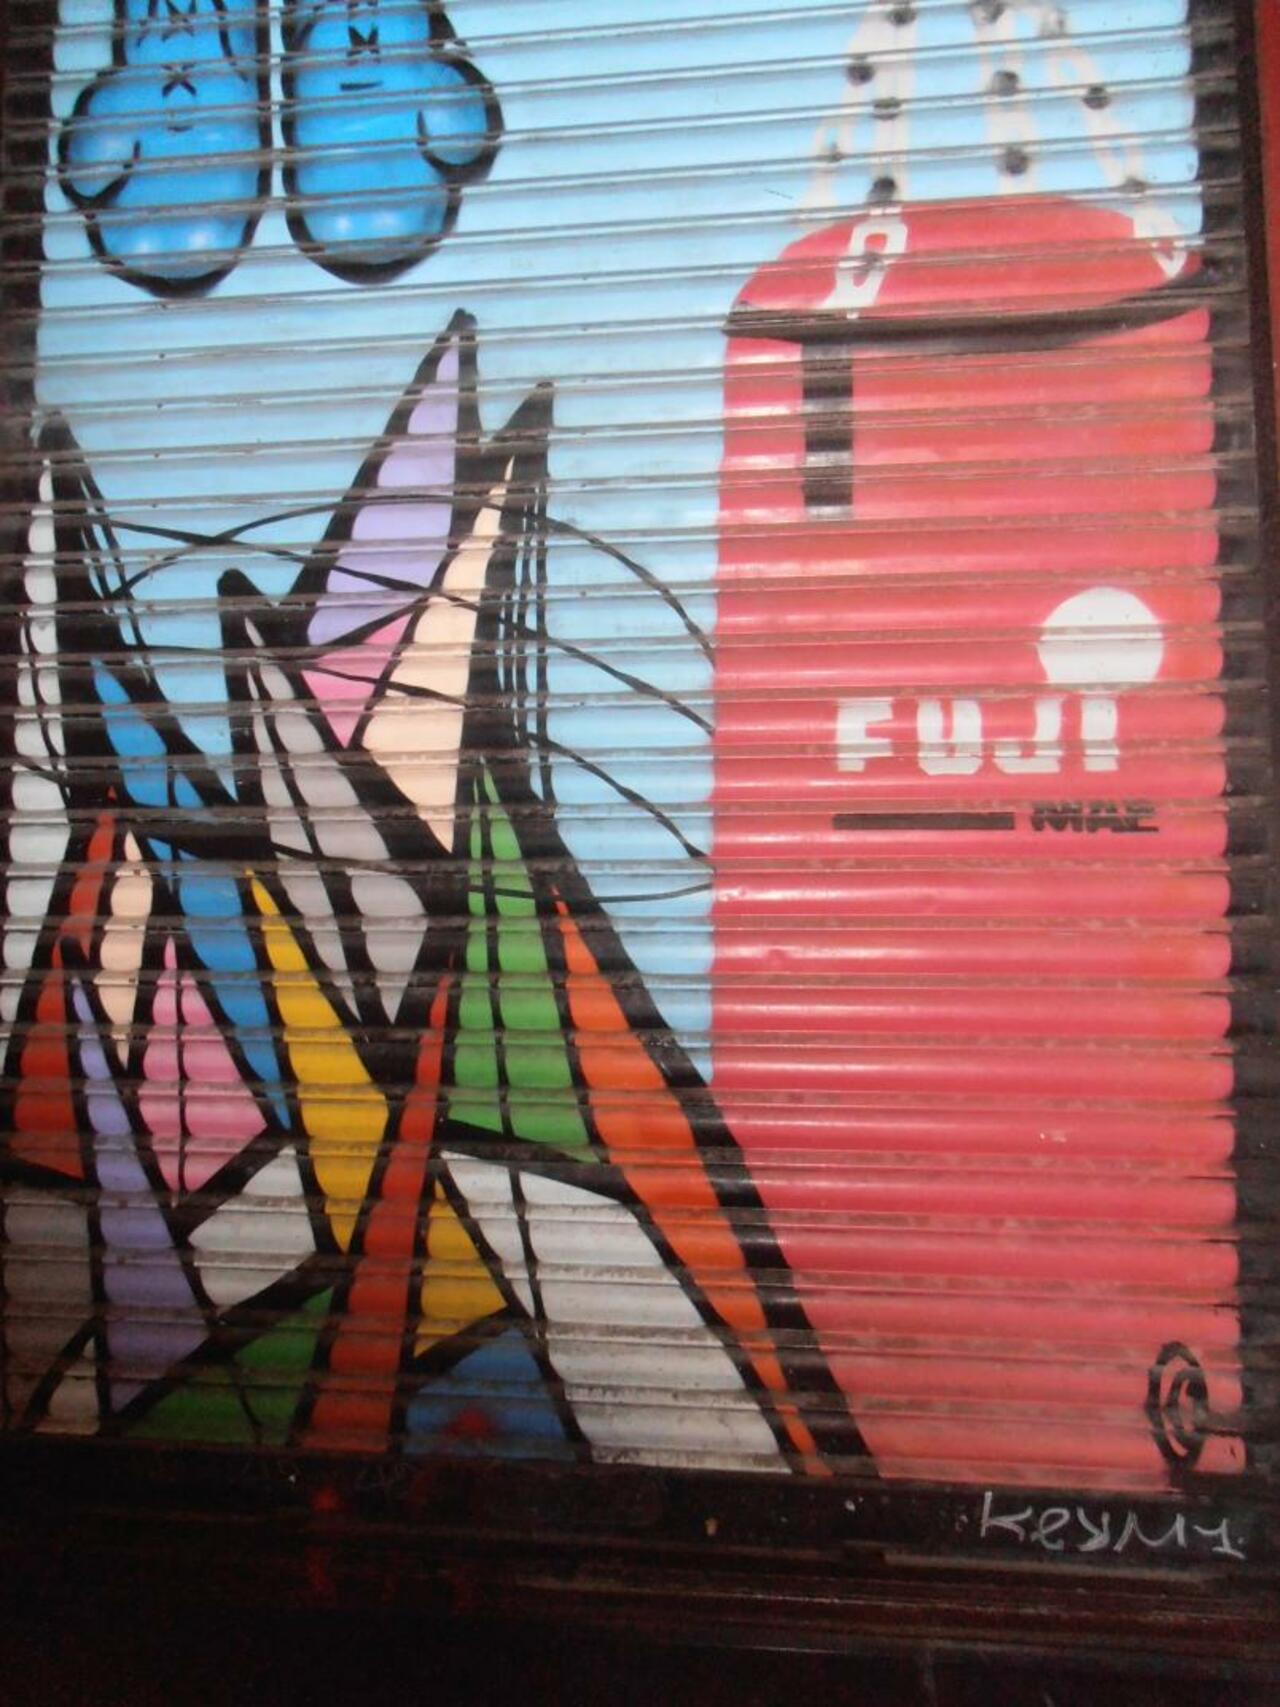 #graffiti #streetart #Barcelona https://t.co/ol5hQVZygw